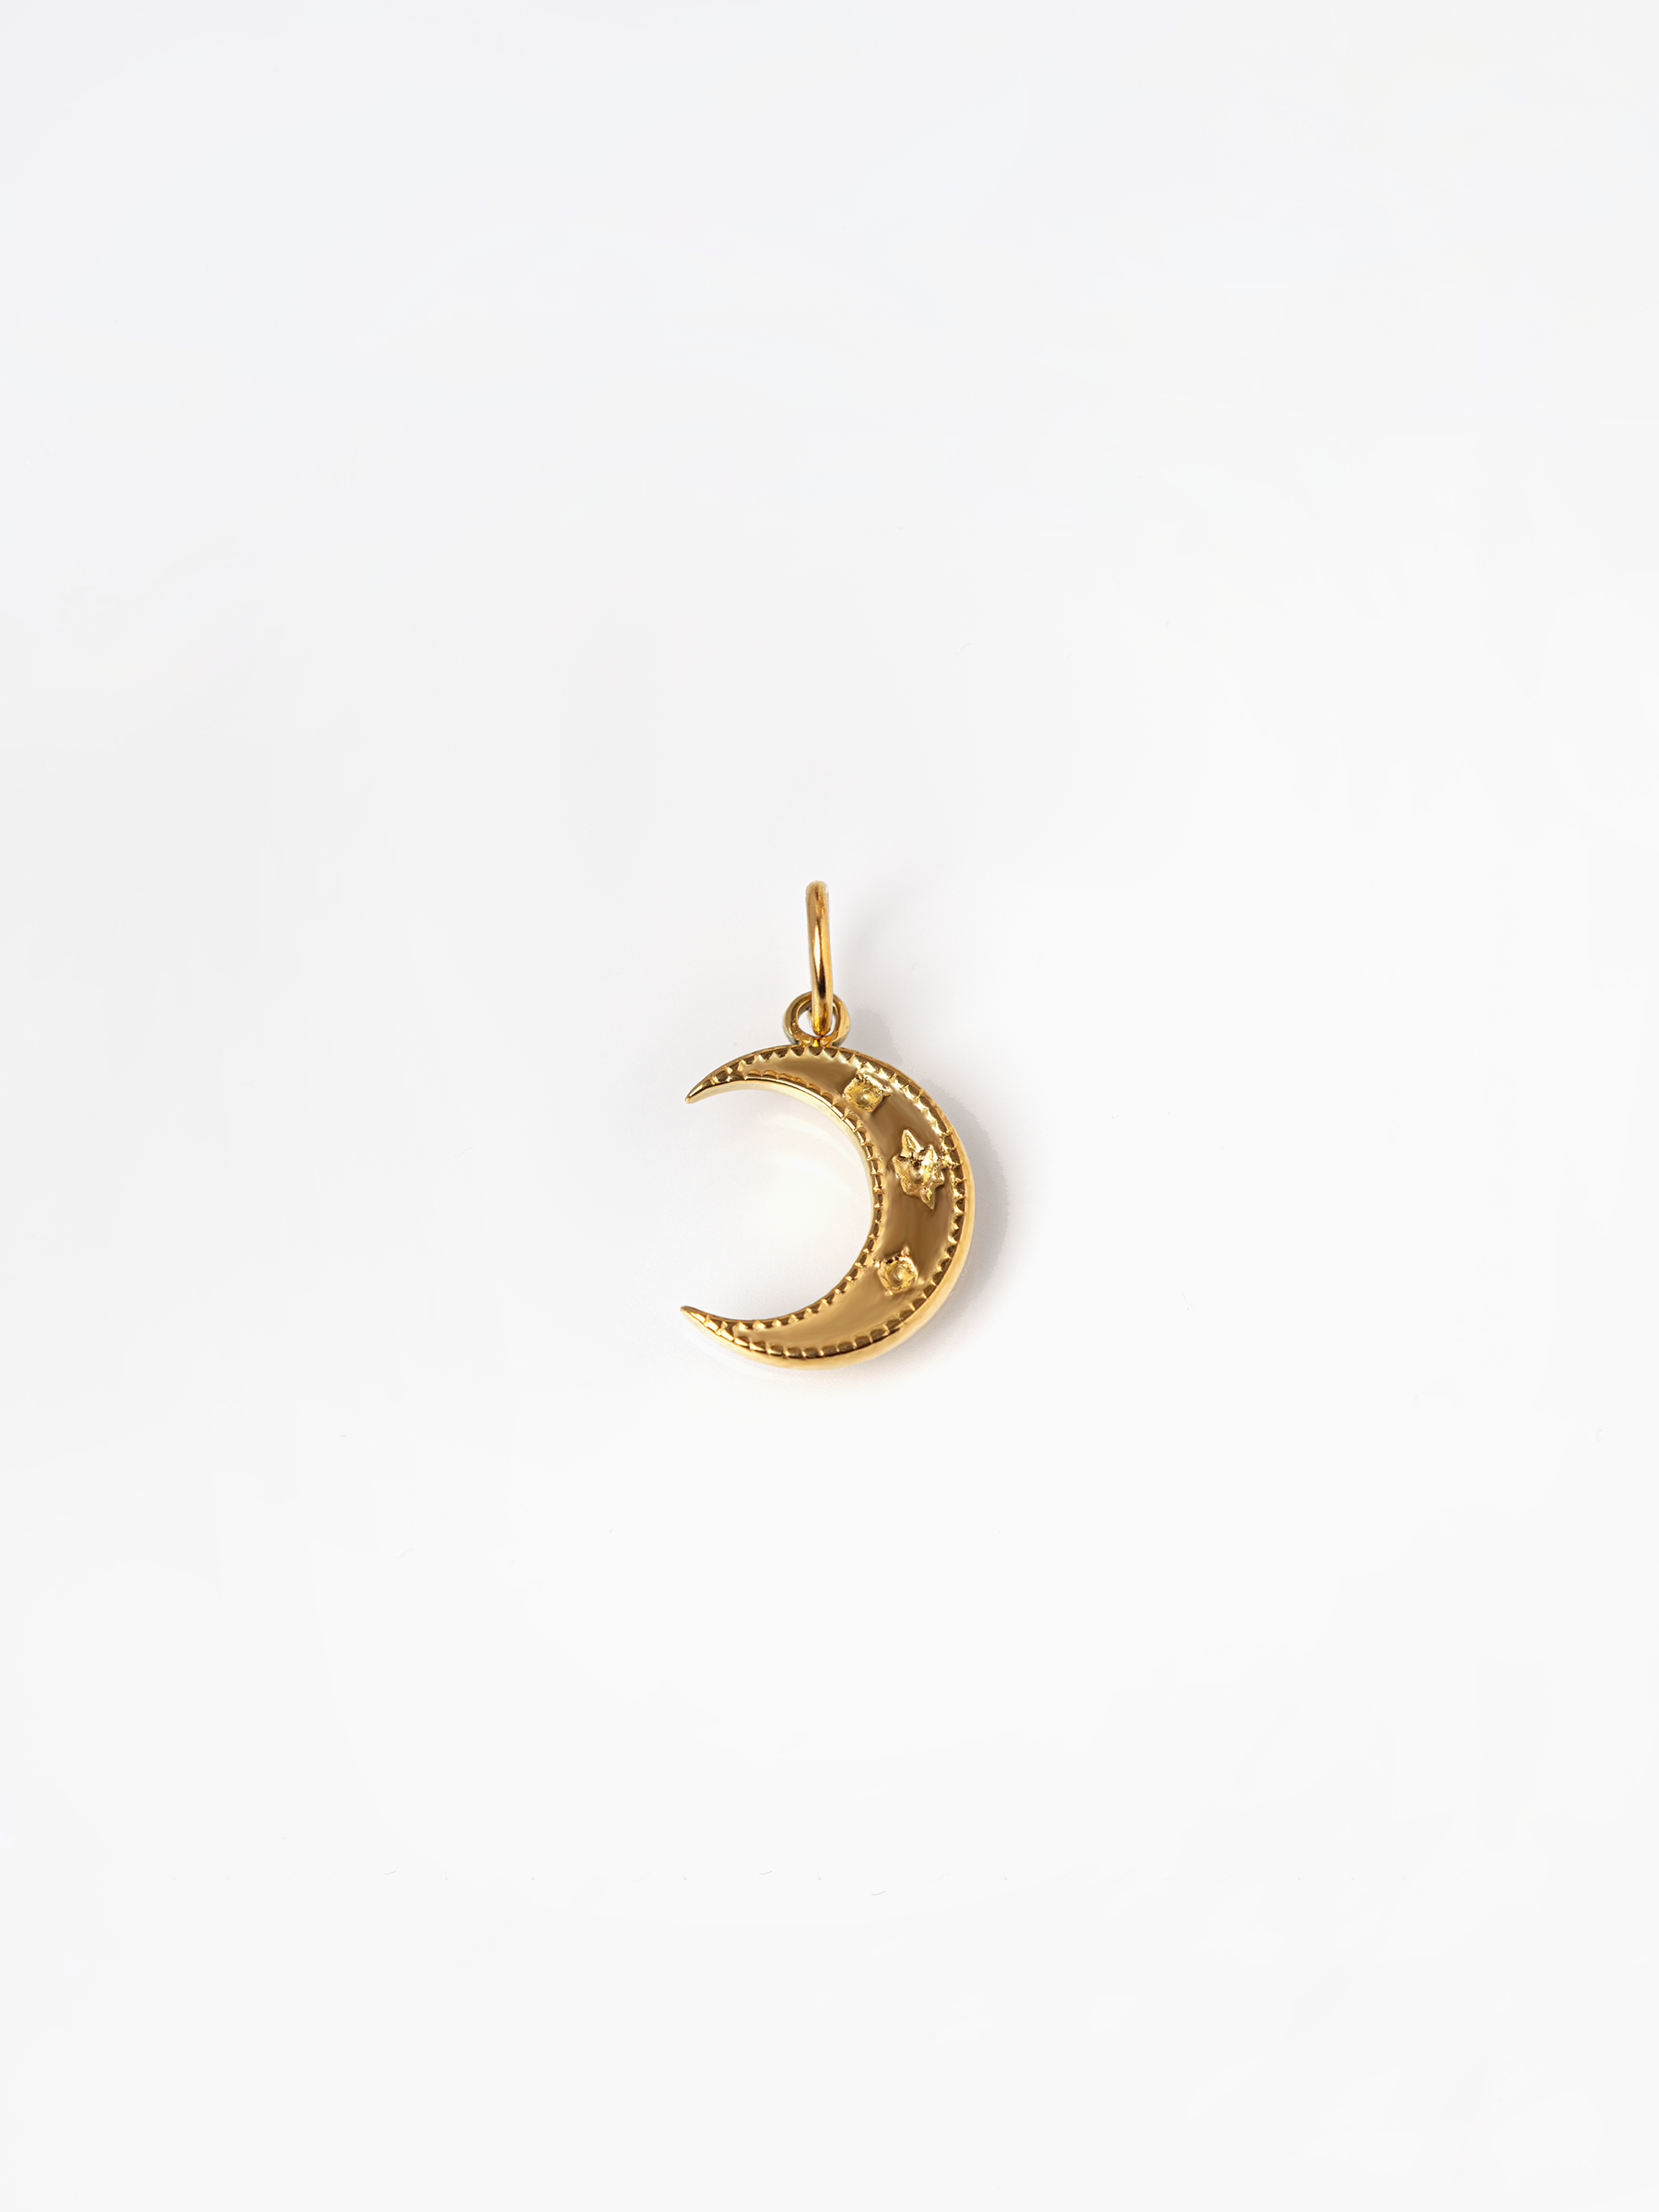 Gold Small Crescent Moon Pendant / Charm